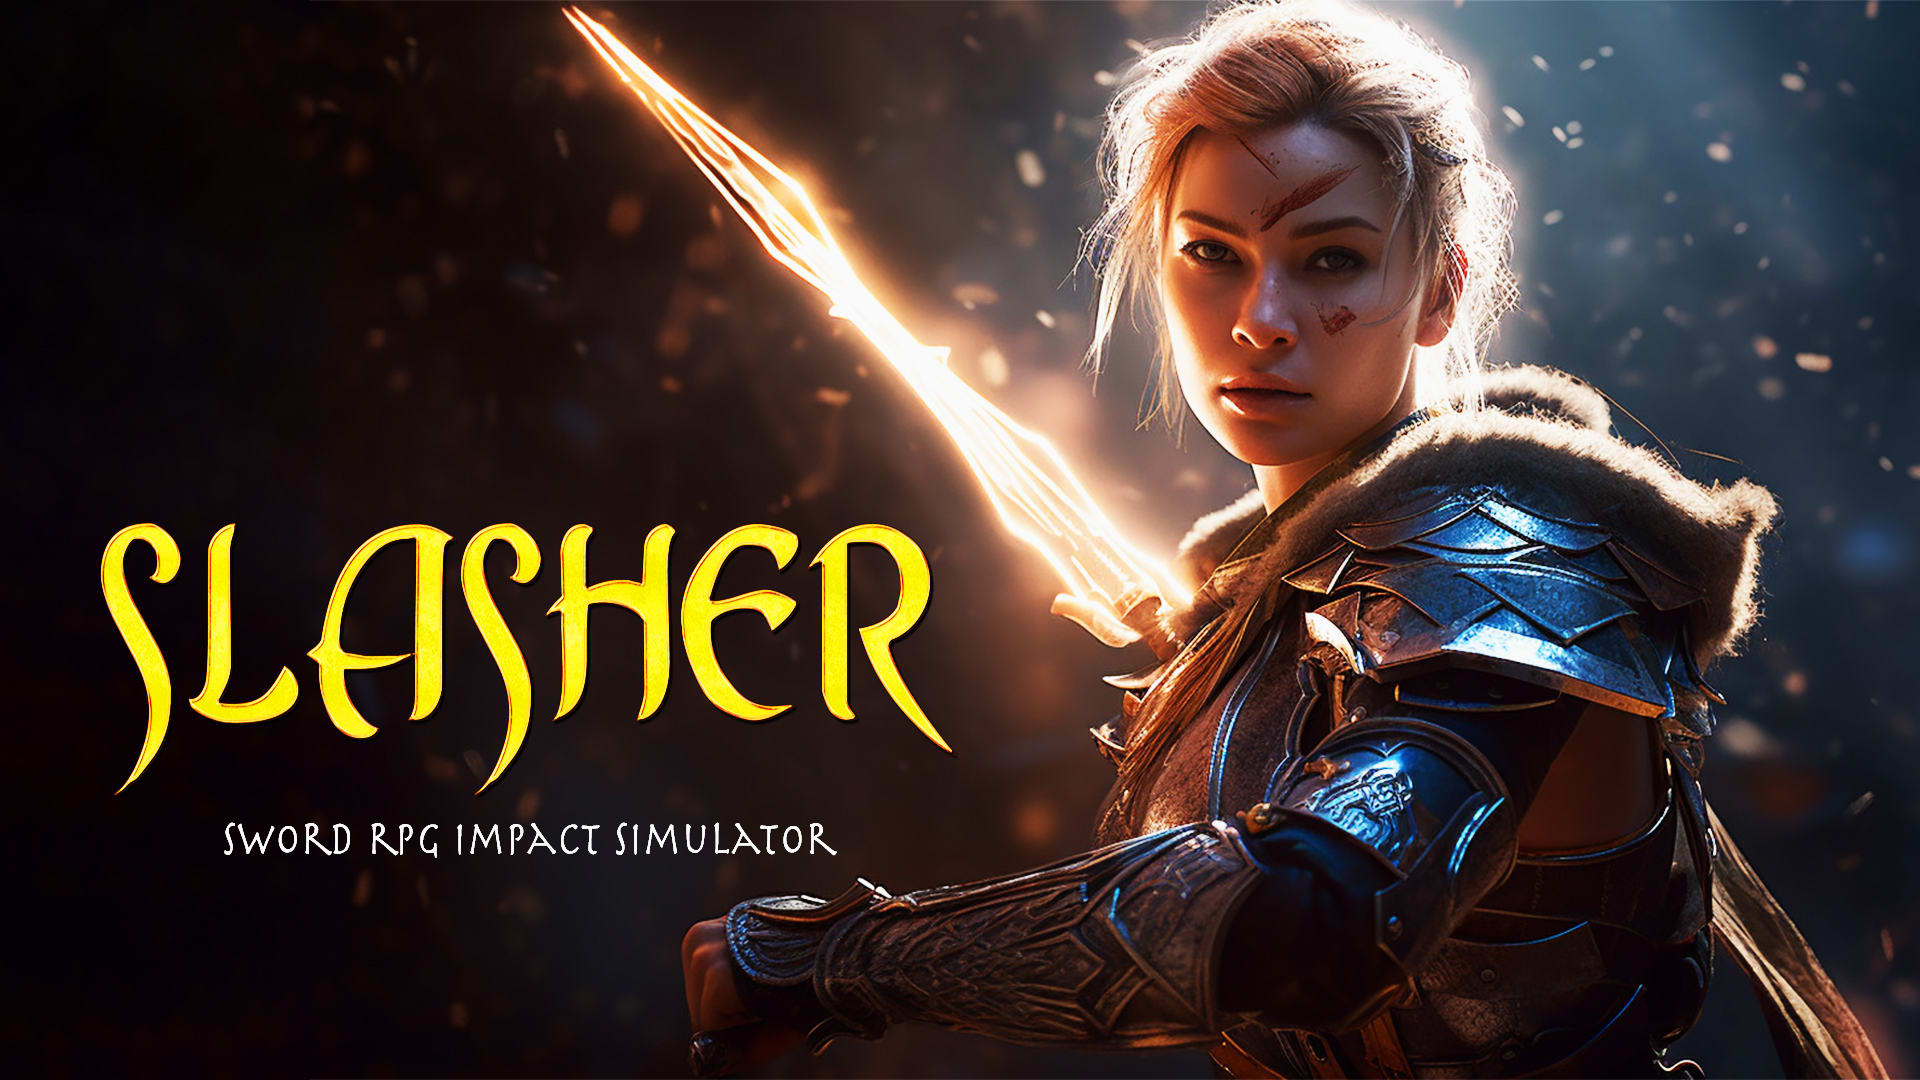 Slasher - Sword RPG Impact Simulator